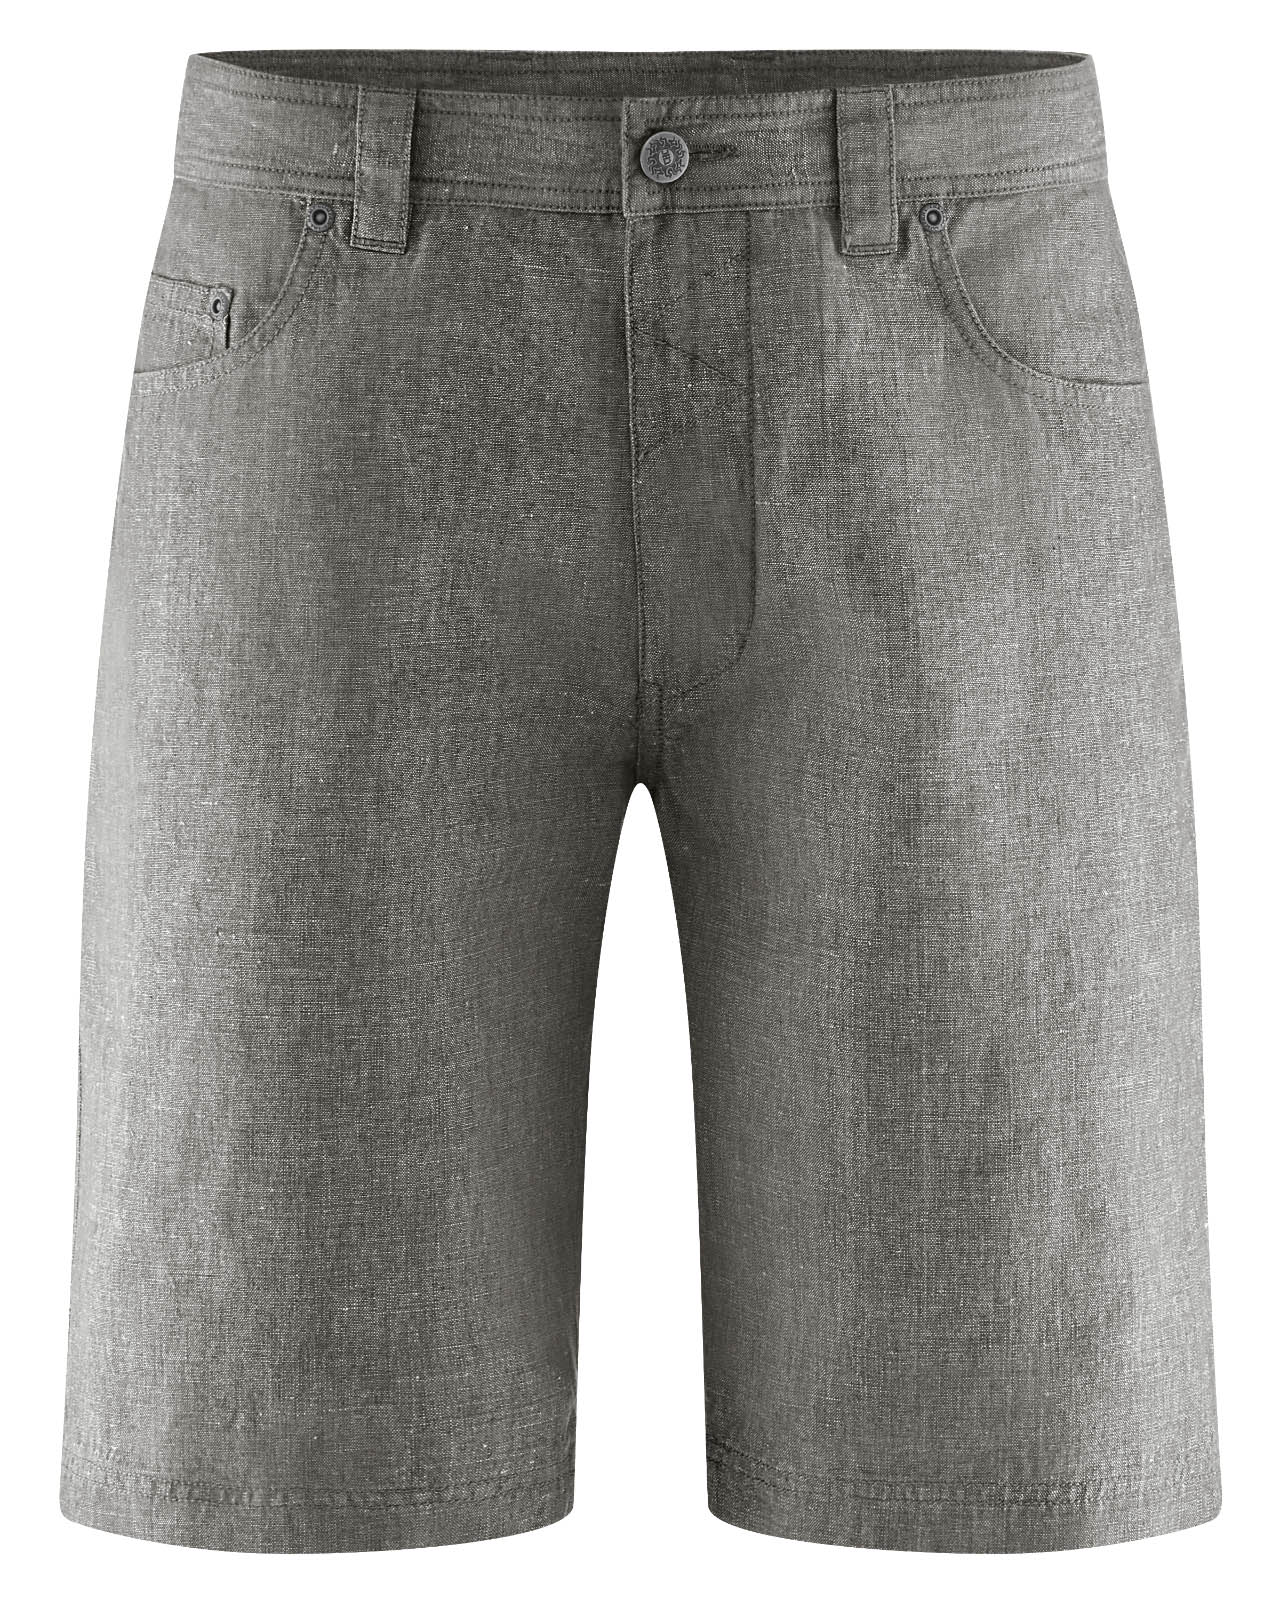 DH585 Moderne Shorts